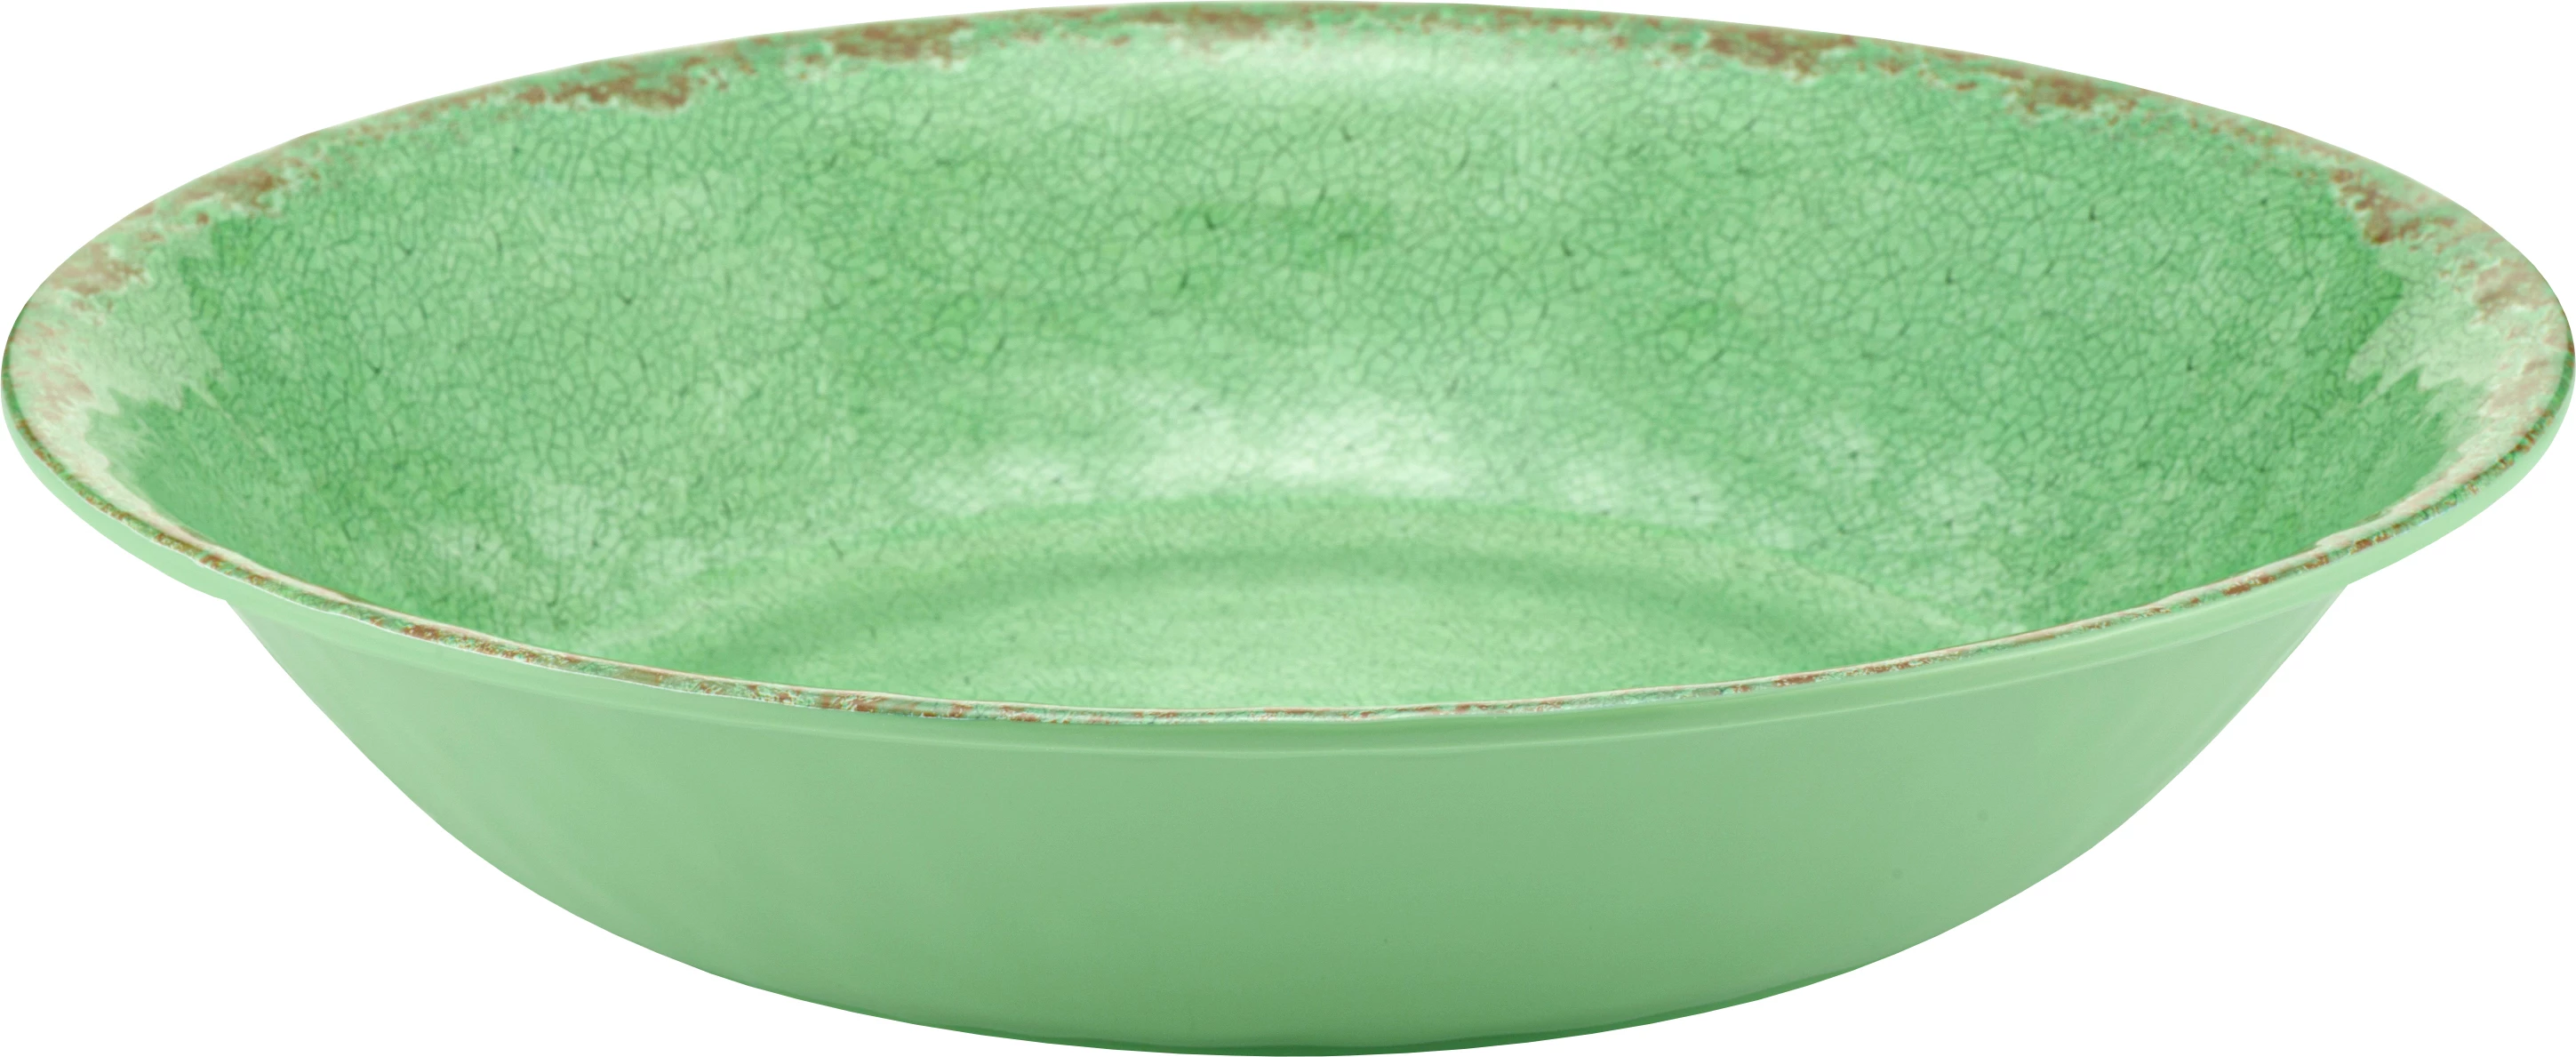 Dalebrook Casablanca skål, grøn, 350 cl, ø35 cm